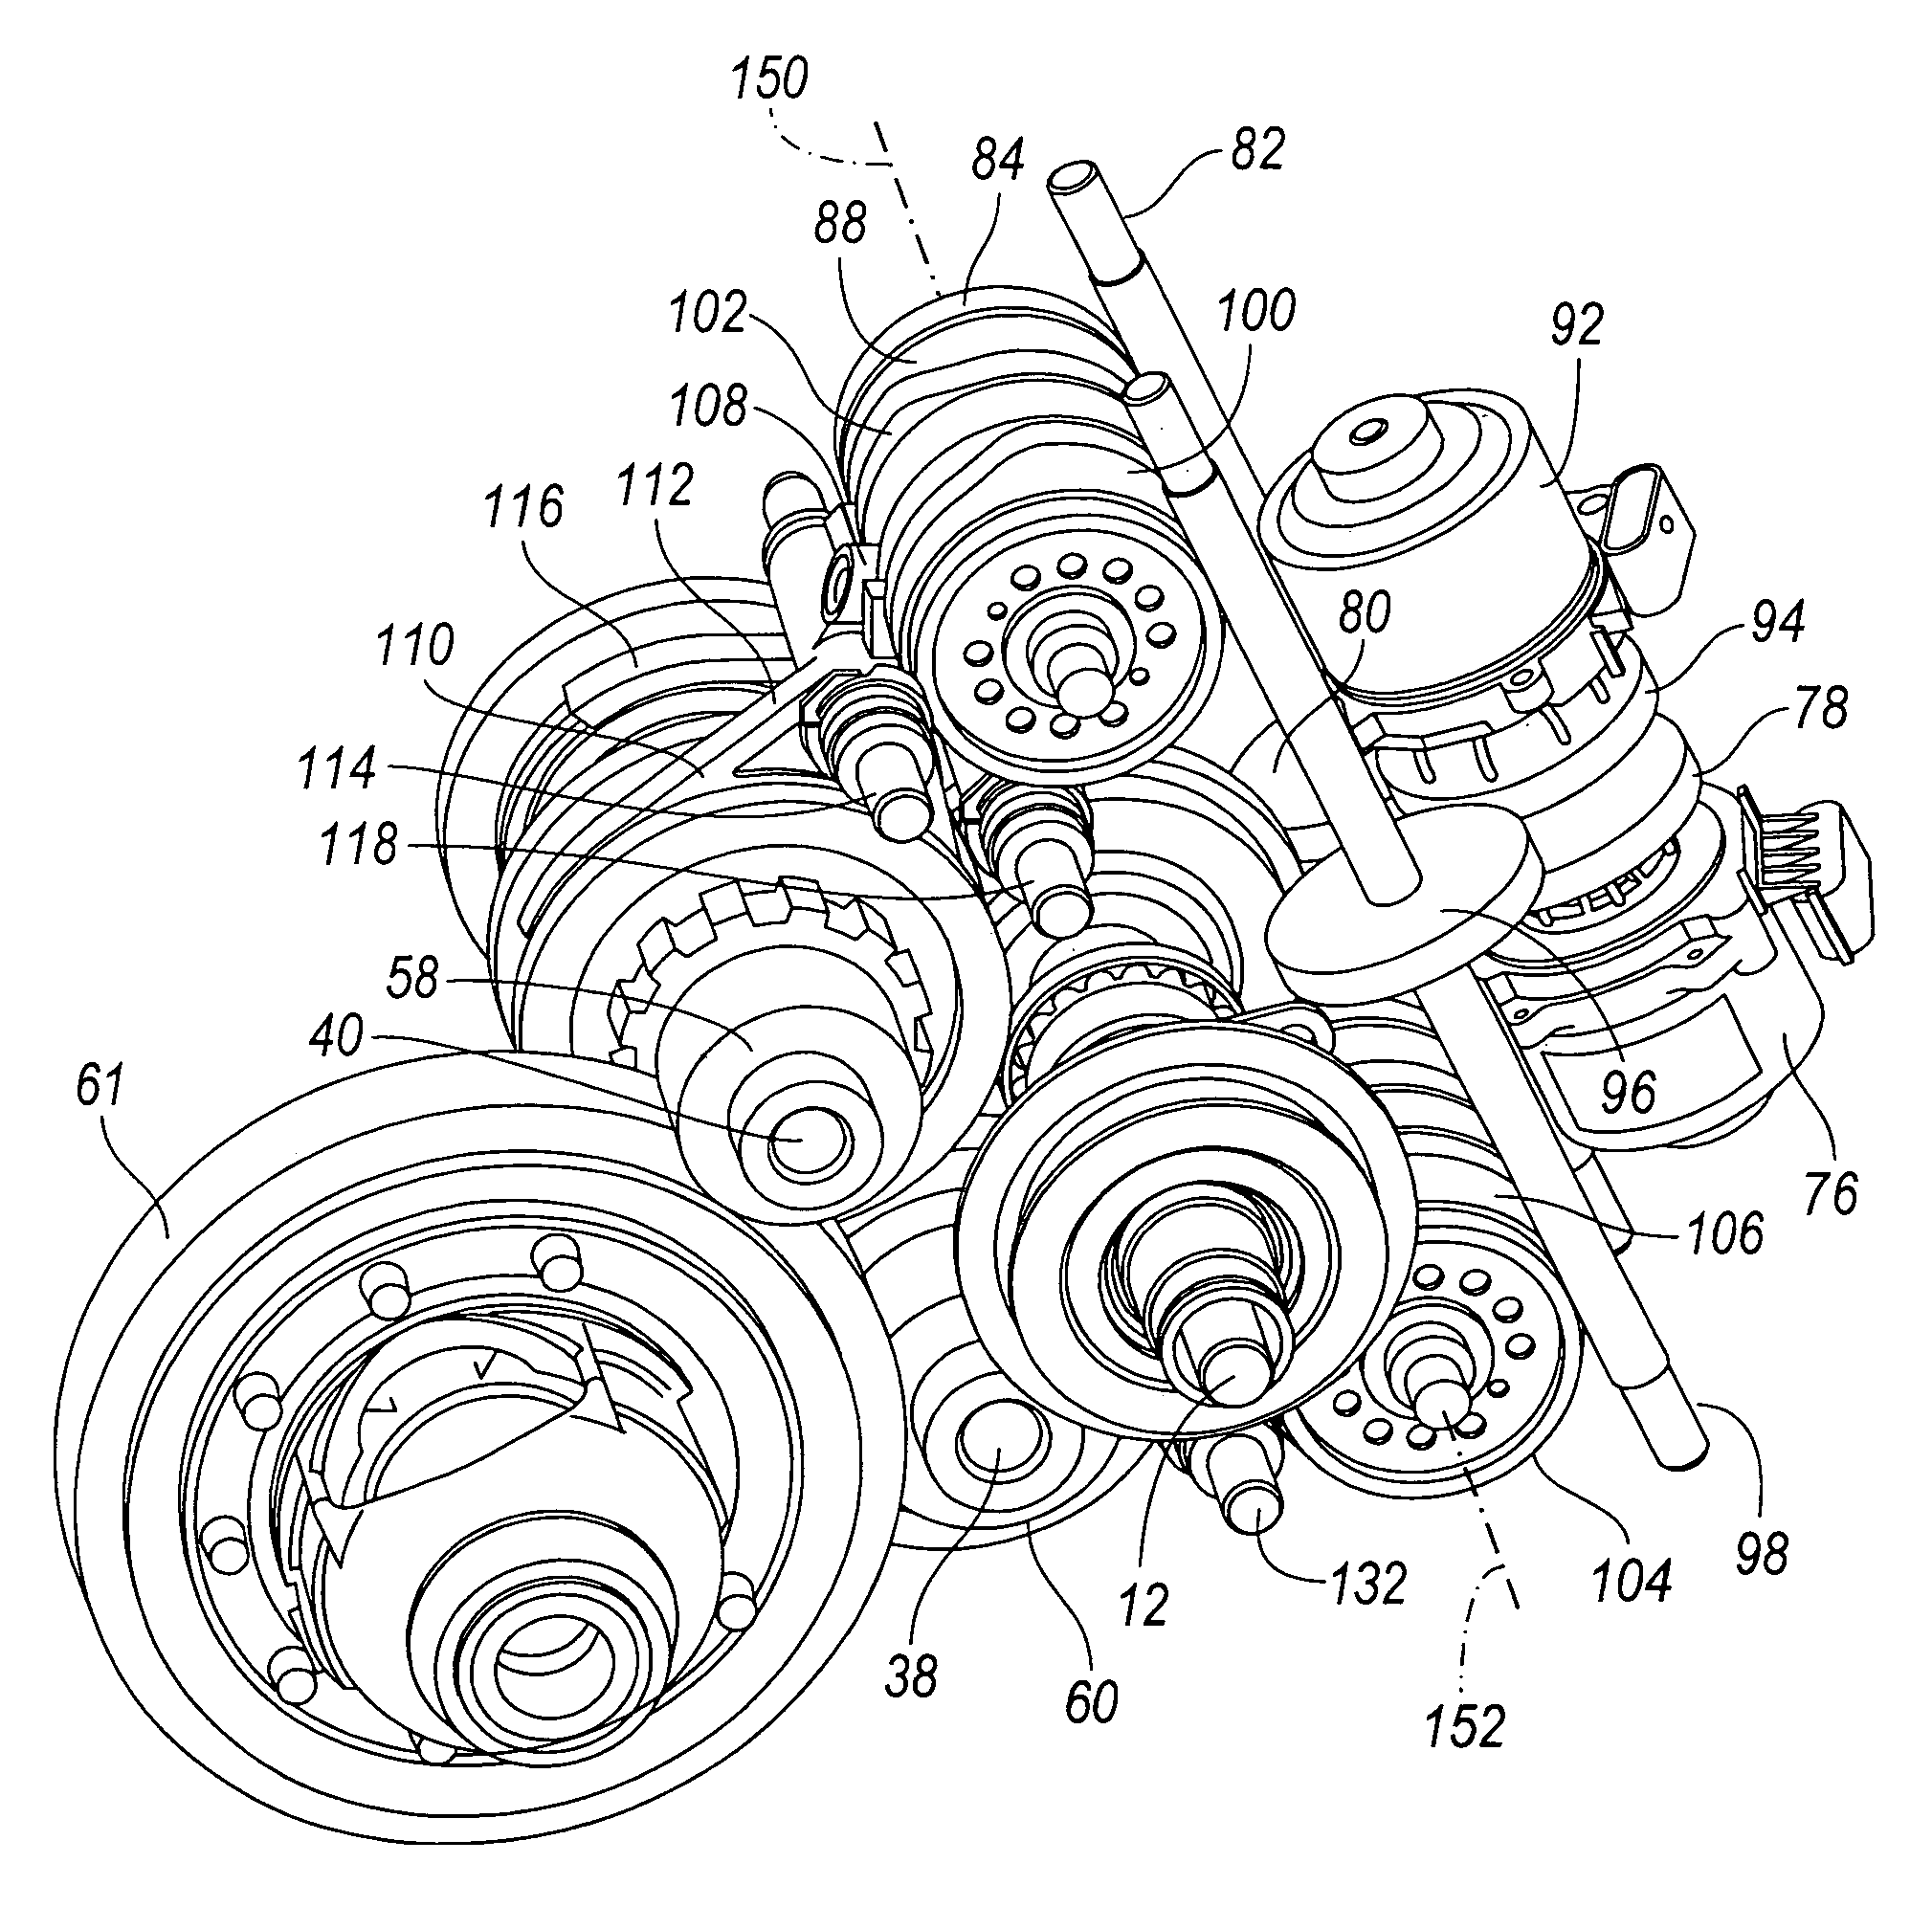 Actuator mechanism for shift motors of a transmission